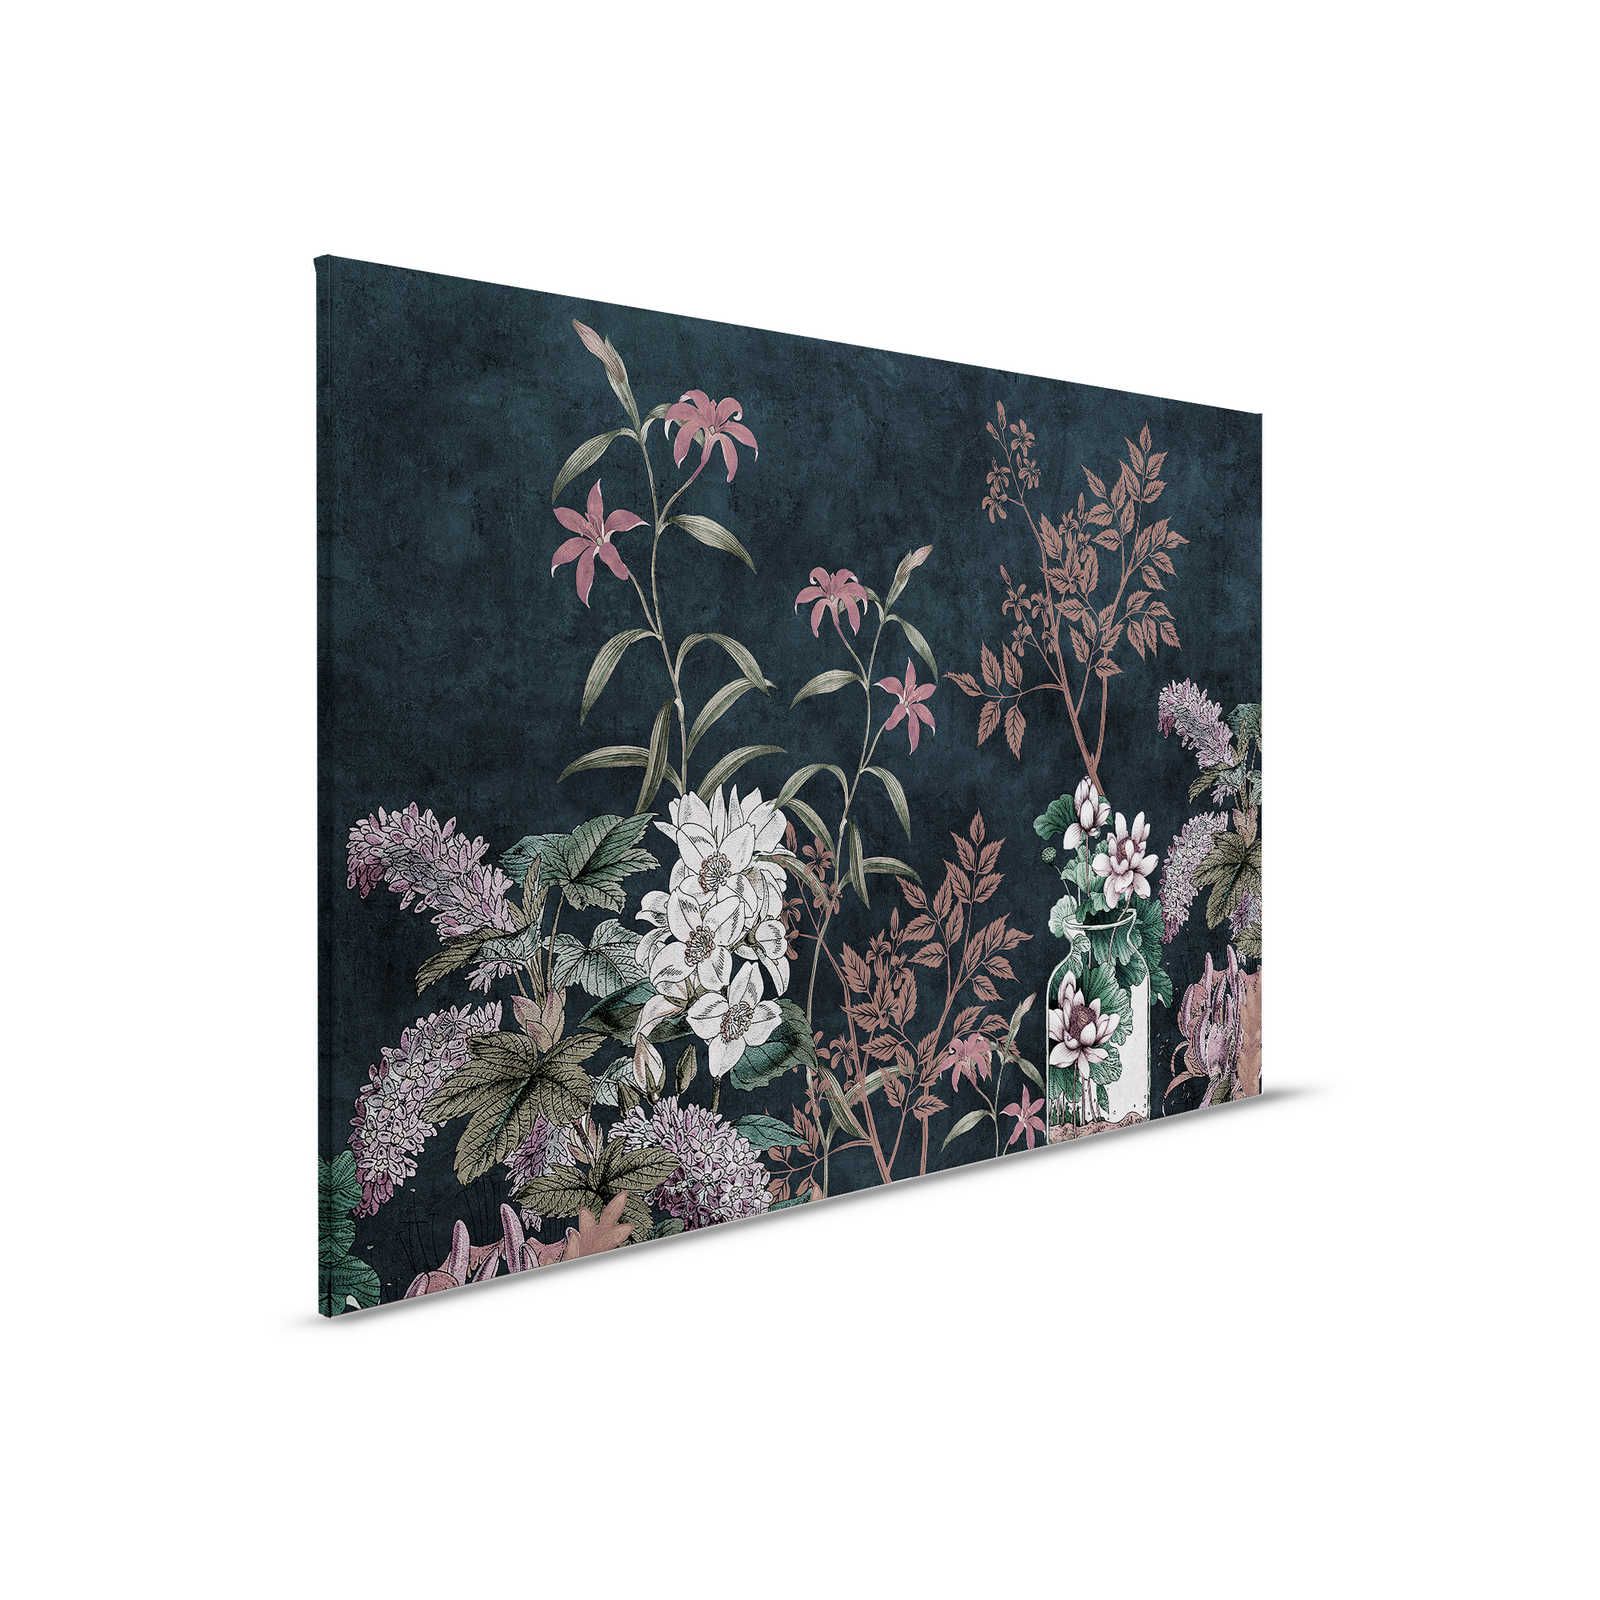         Dark Room 2 - Schwarzes Leinwandbild Botanical Muster Rosa – 0,90 m x 0,60 m
    